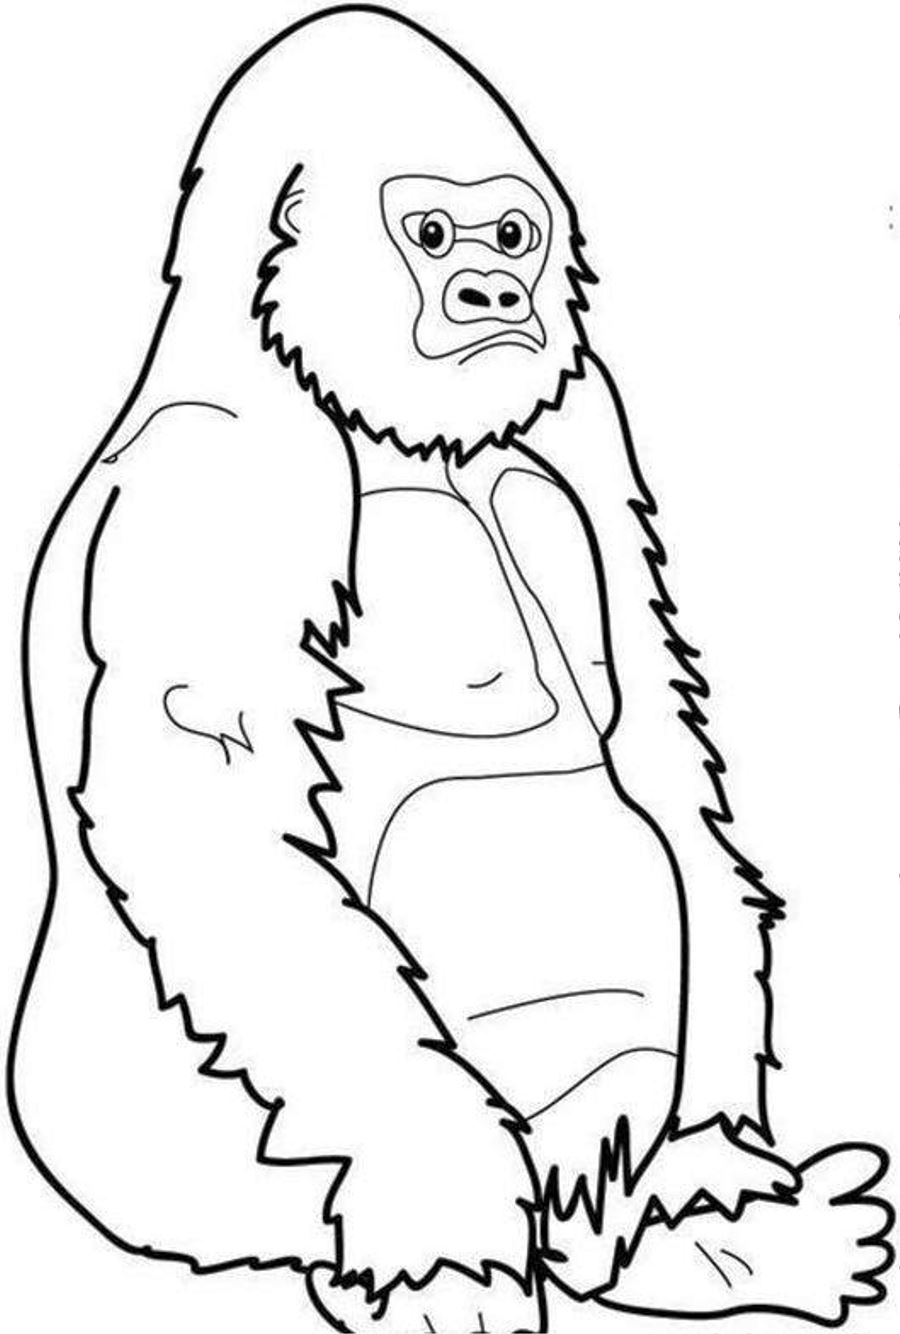 Gorilla Clip Art Black And White | Clipart Panda - Free Clipart Images